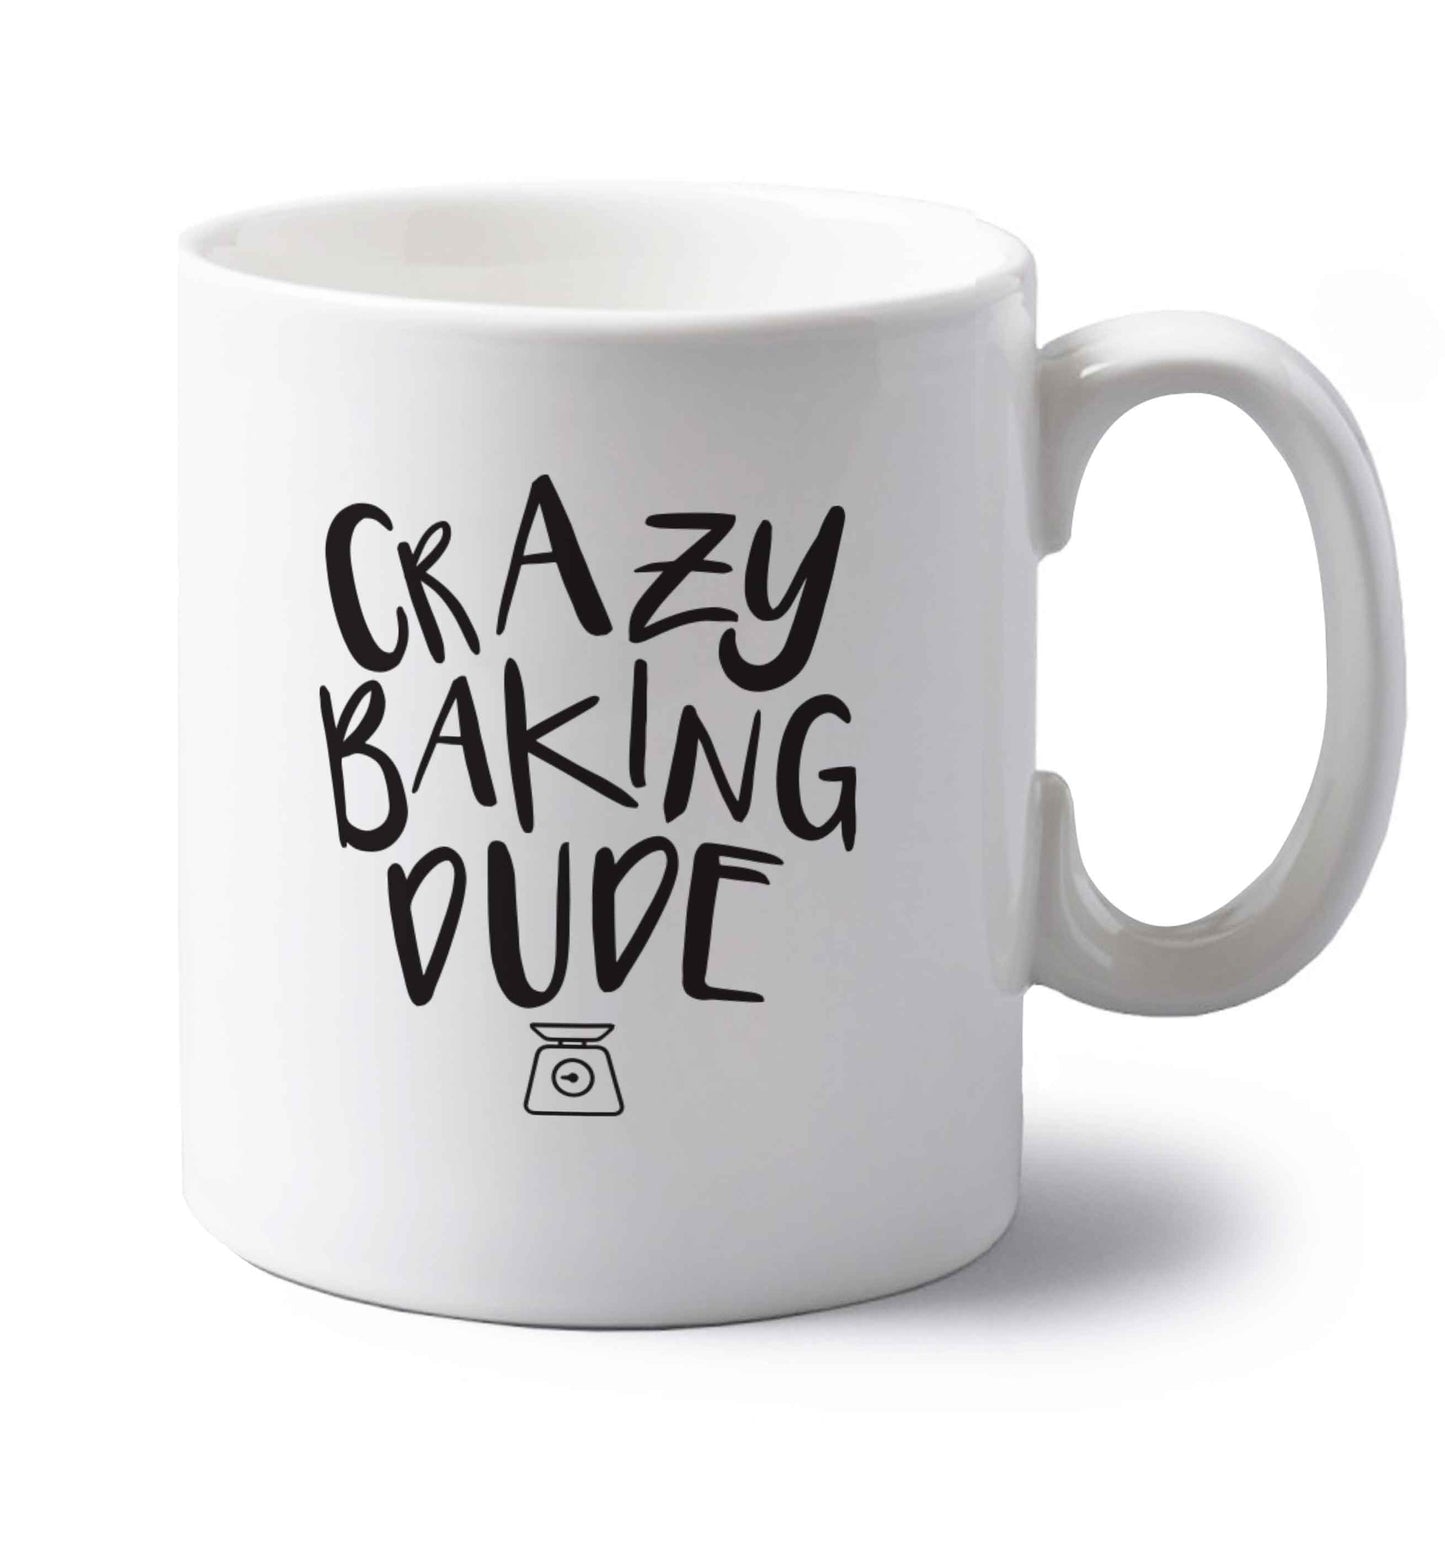 Crazy baking dude left handed white ceramic mug 